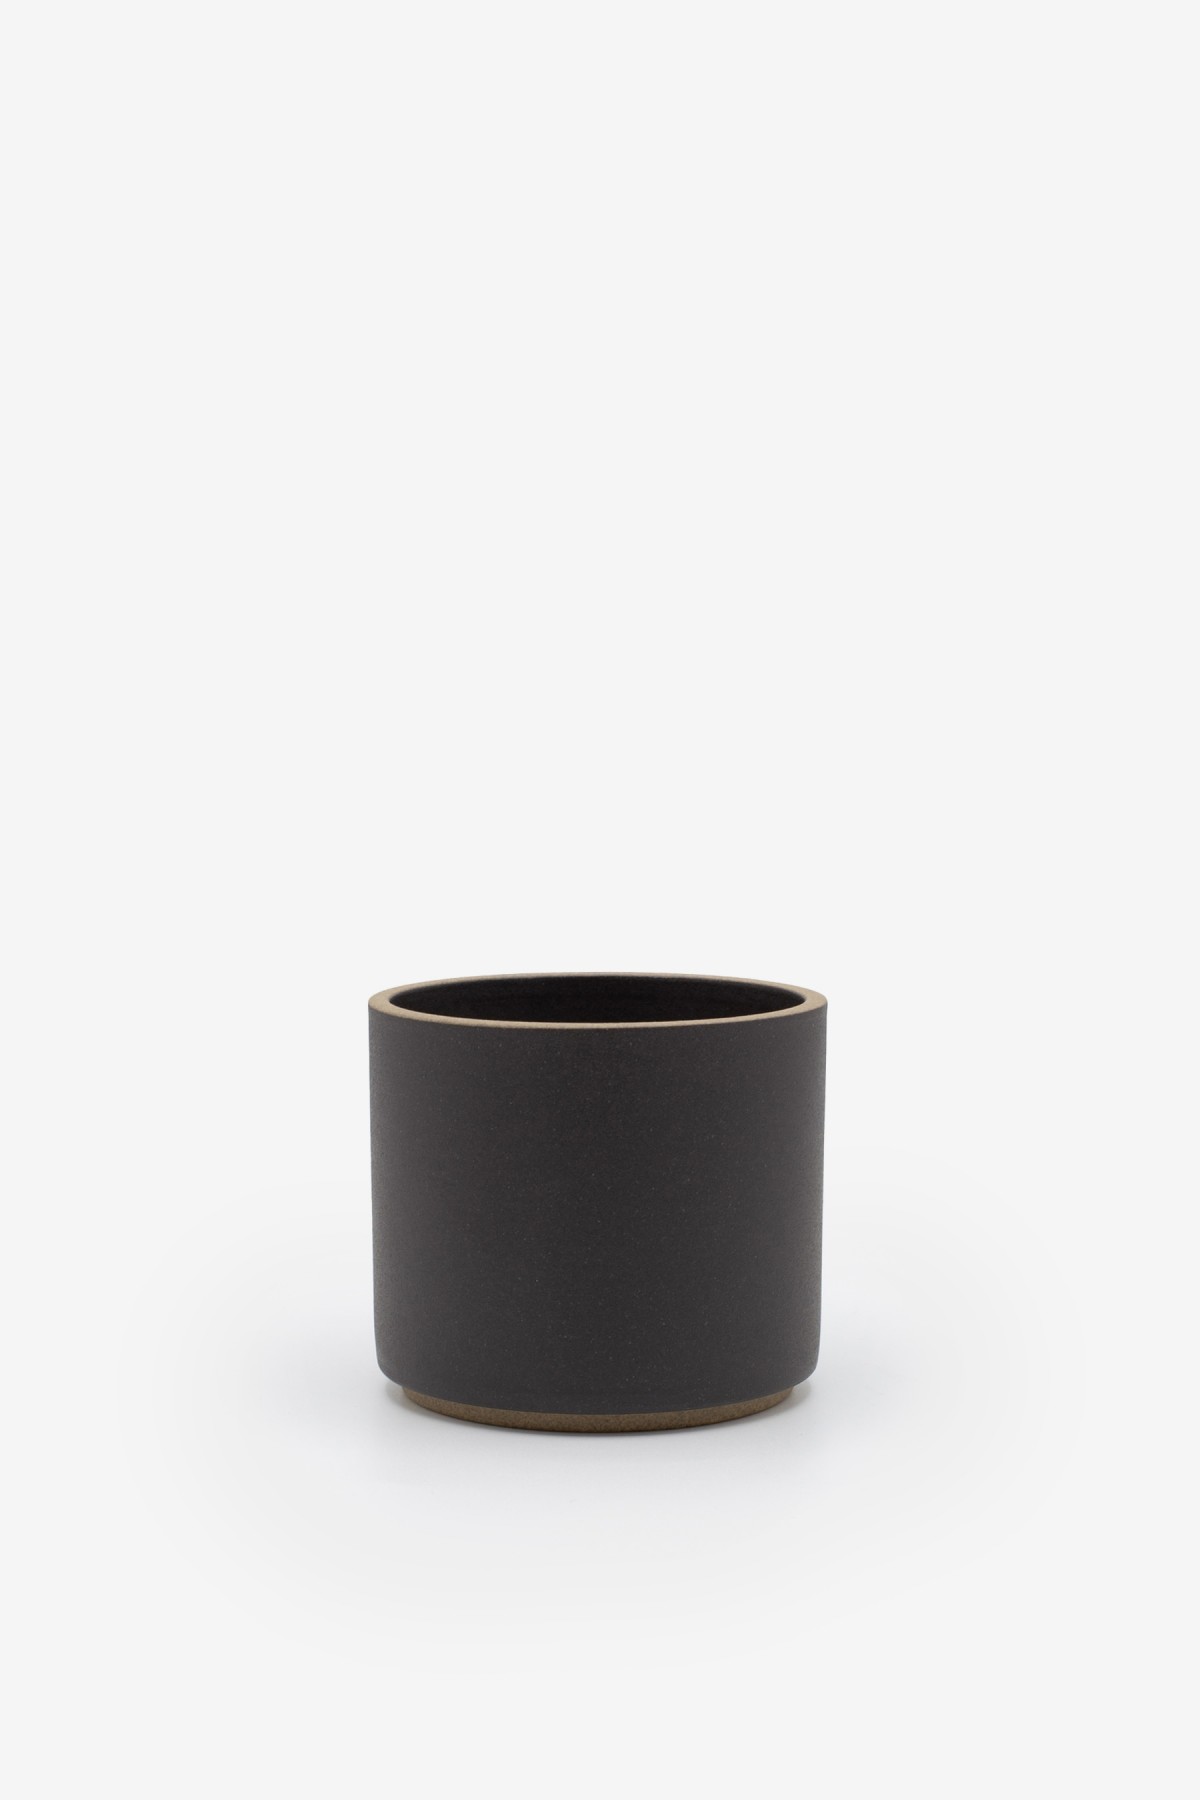 Hasami Porcelain Cup Large in Black